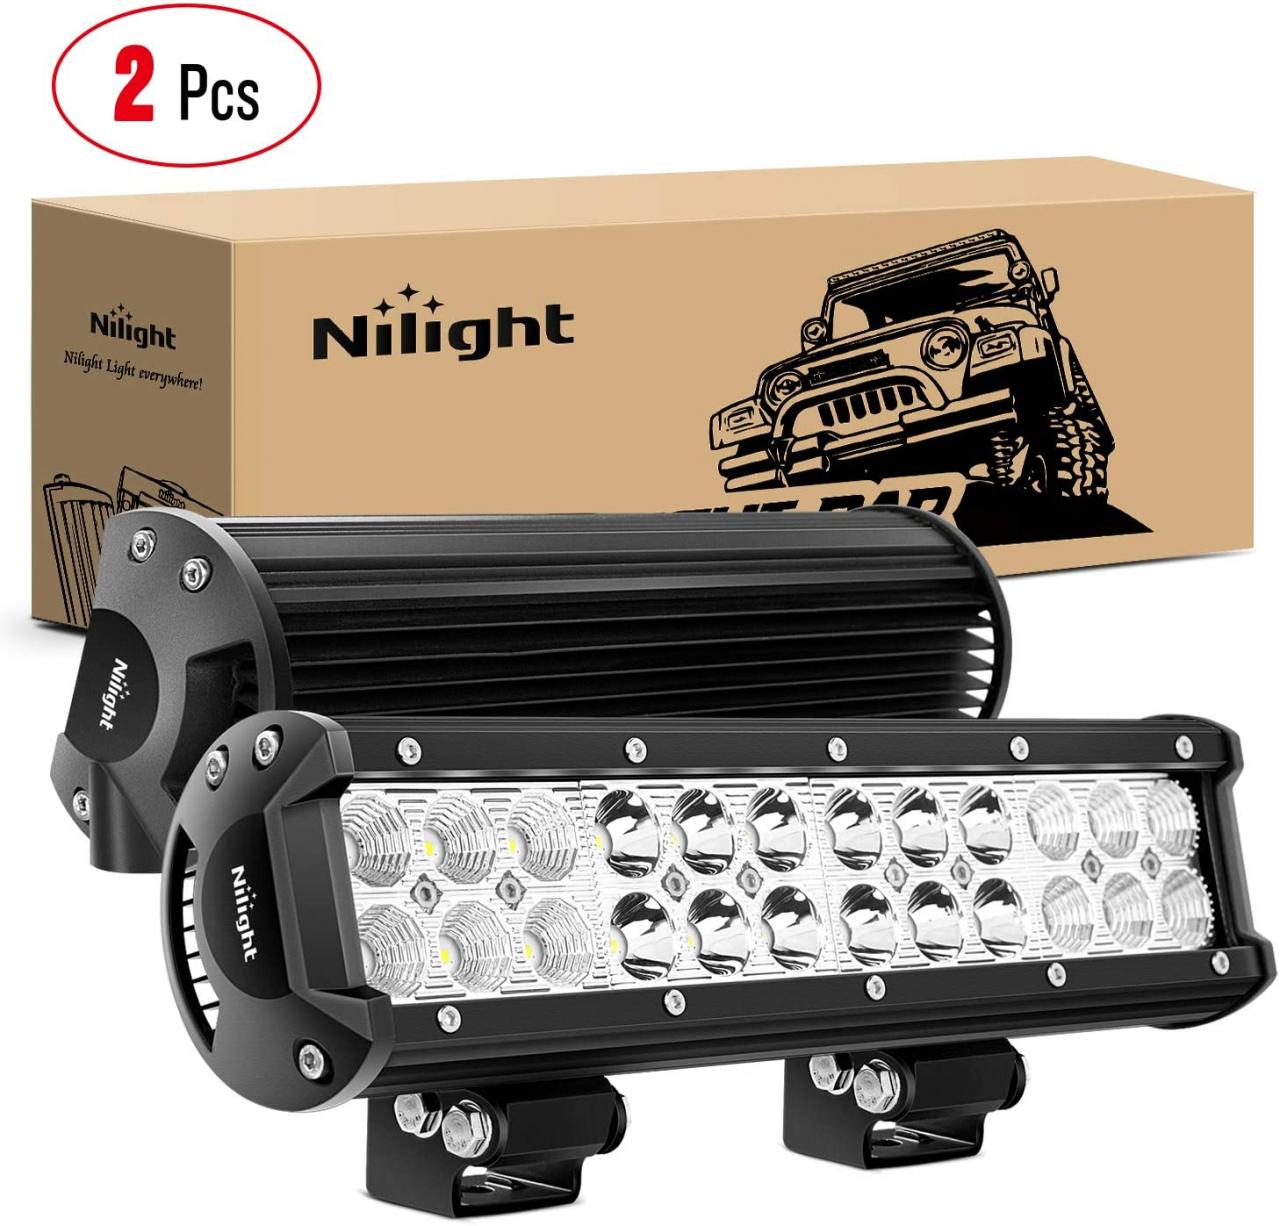 Buy Nilight - 70003C-A 22 120w LED Light Bar Flood Spot Combo Work Light  Driving Lights Fog Lamp Offroad Lighting for SUV Ute ATV Truck 4x4 Boat  Online in Hong Kong. B012CGFOOQ